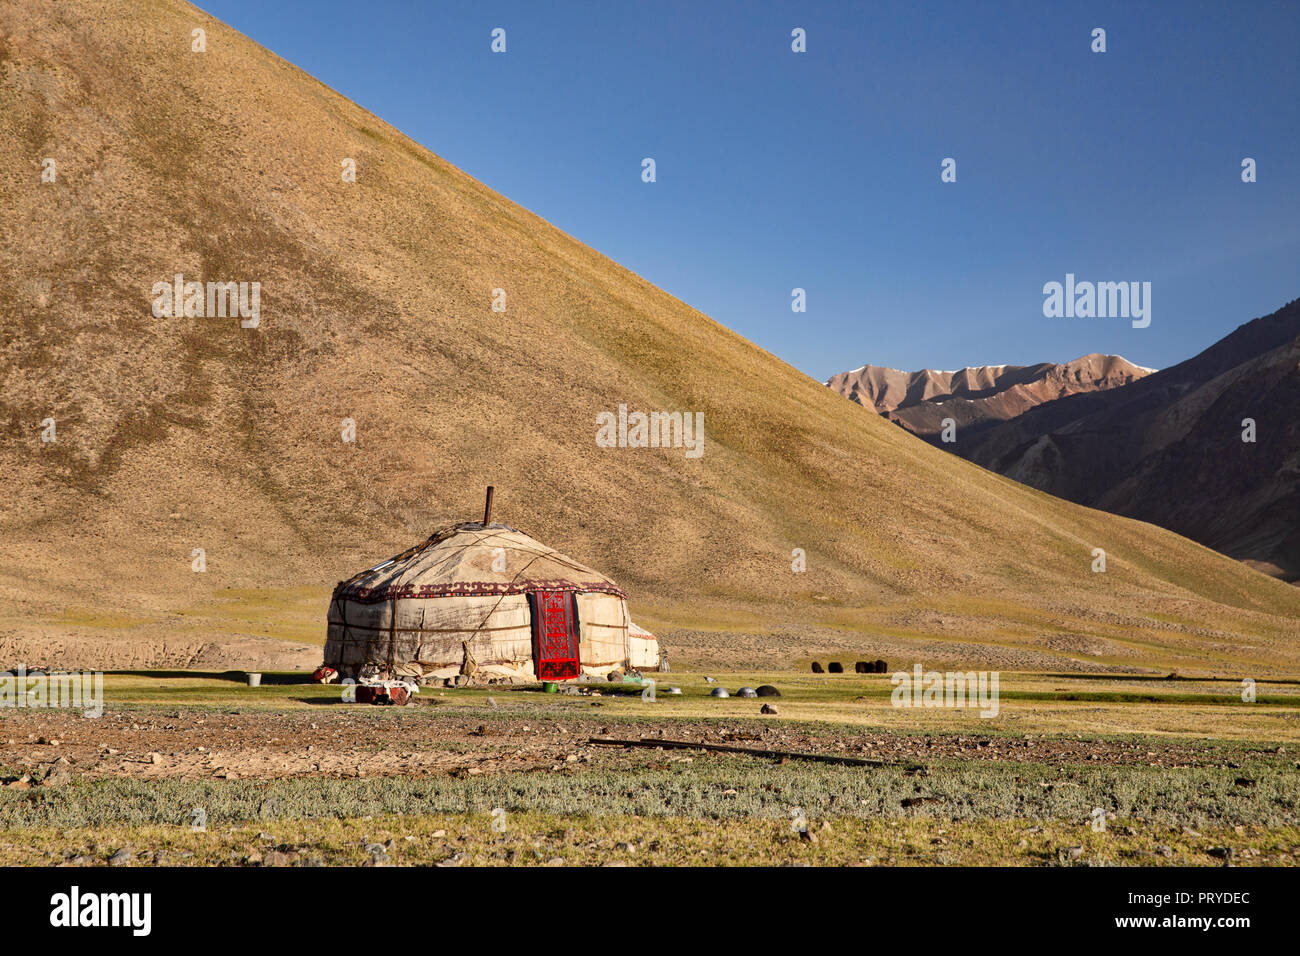 Kyrgyz yurt at sunrise golden hour in the remote Pshart Valley in the Pamir Mountains, Gorno-Badakhshan Autonomous Region, Tajikistan. Stock Photo